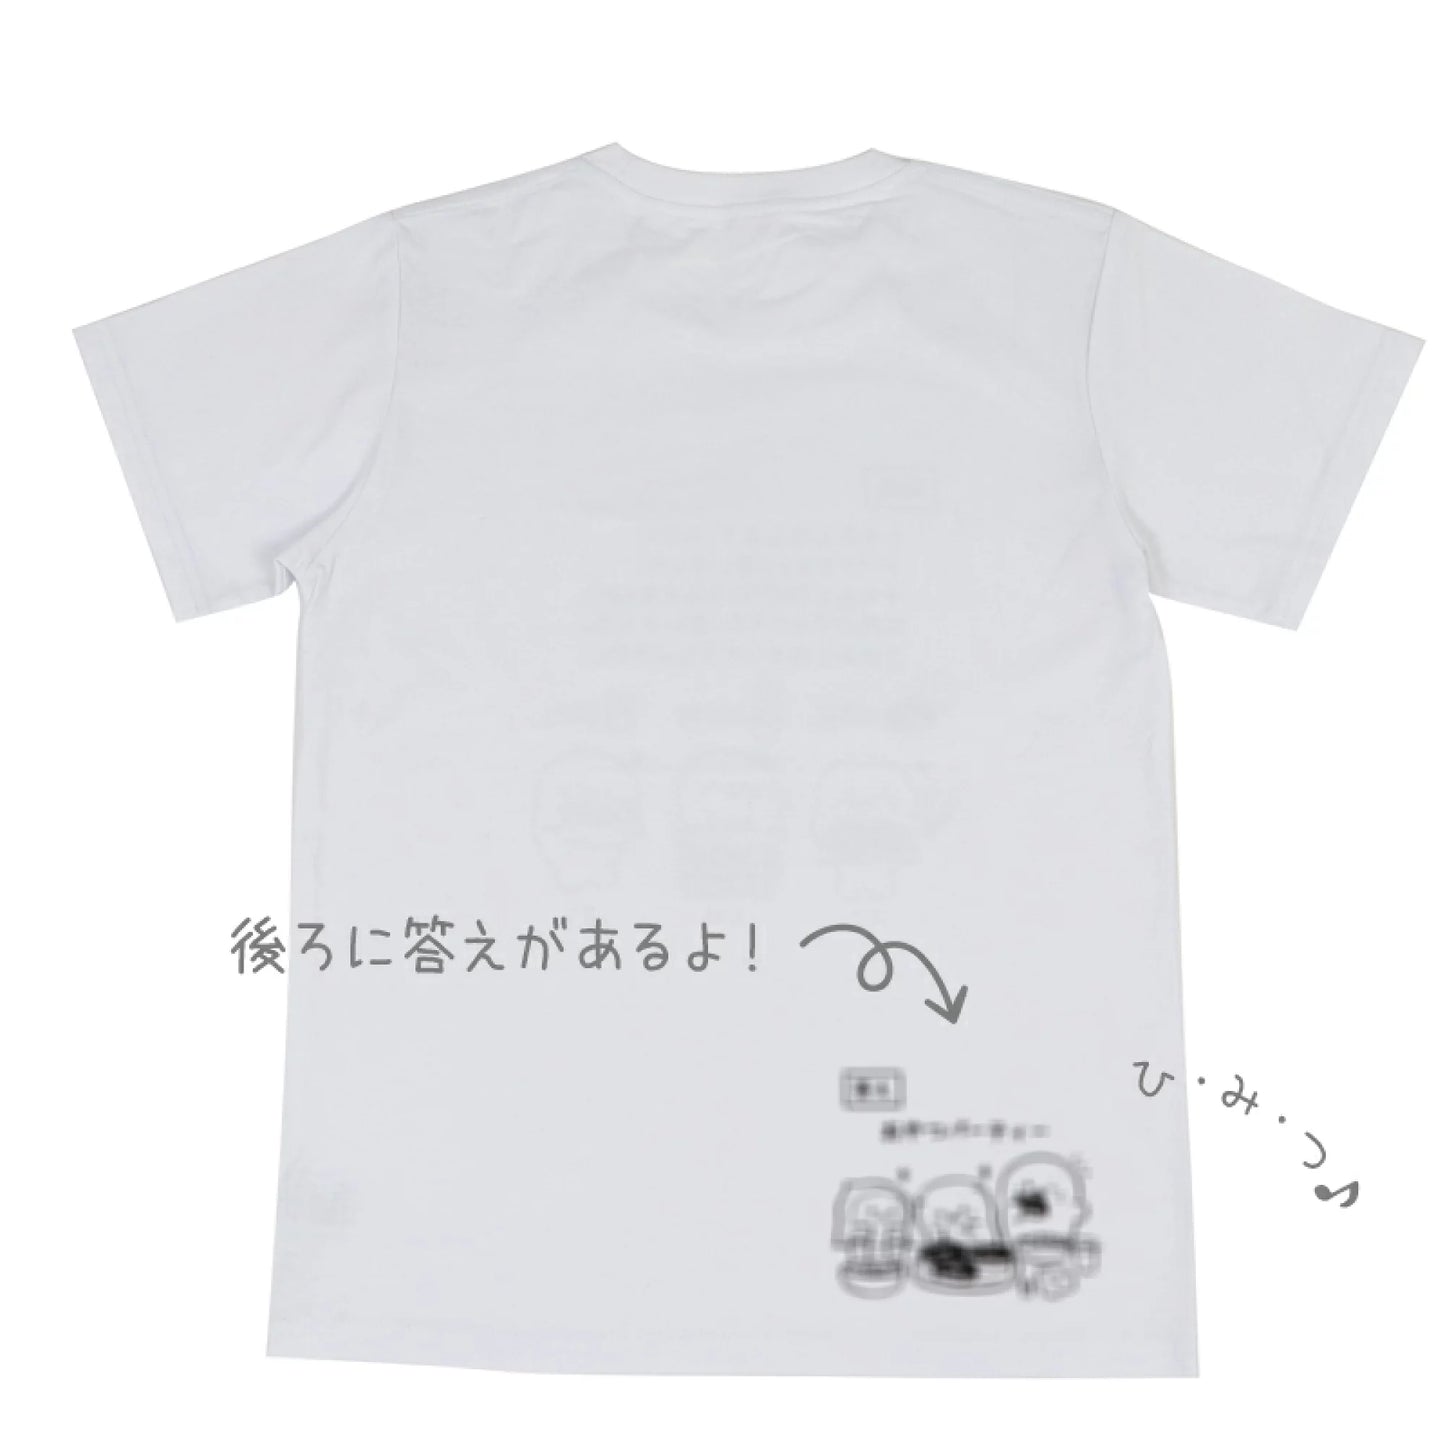 Sirotan T shirt【文章題】